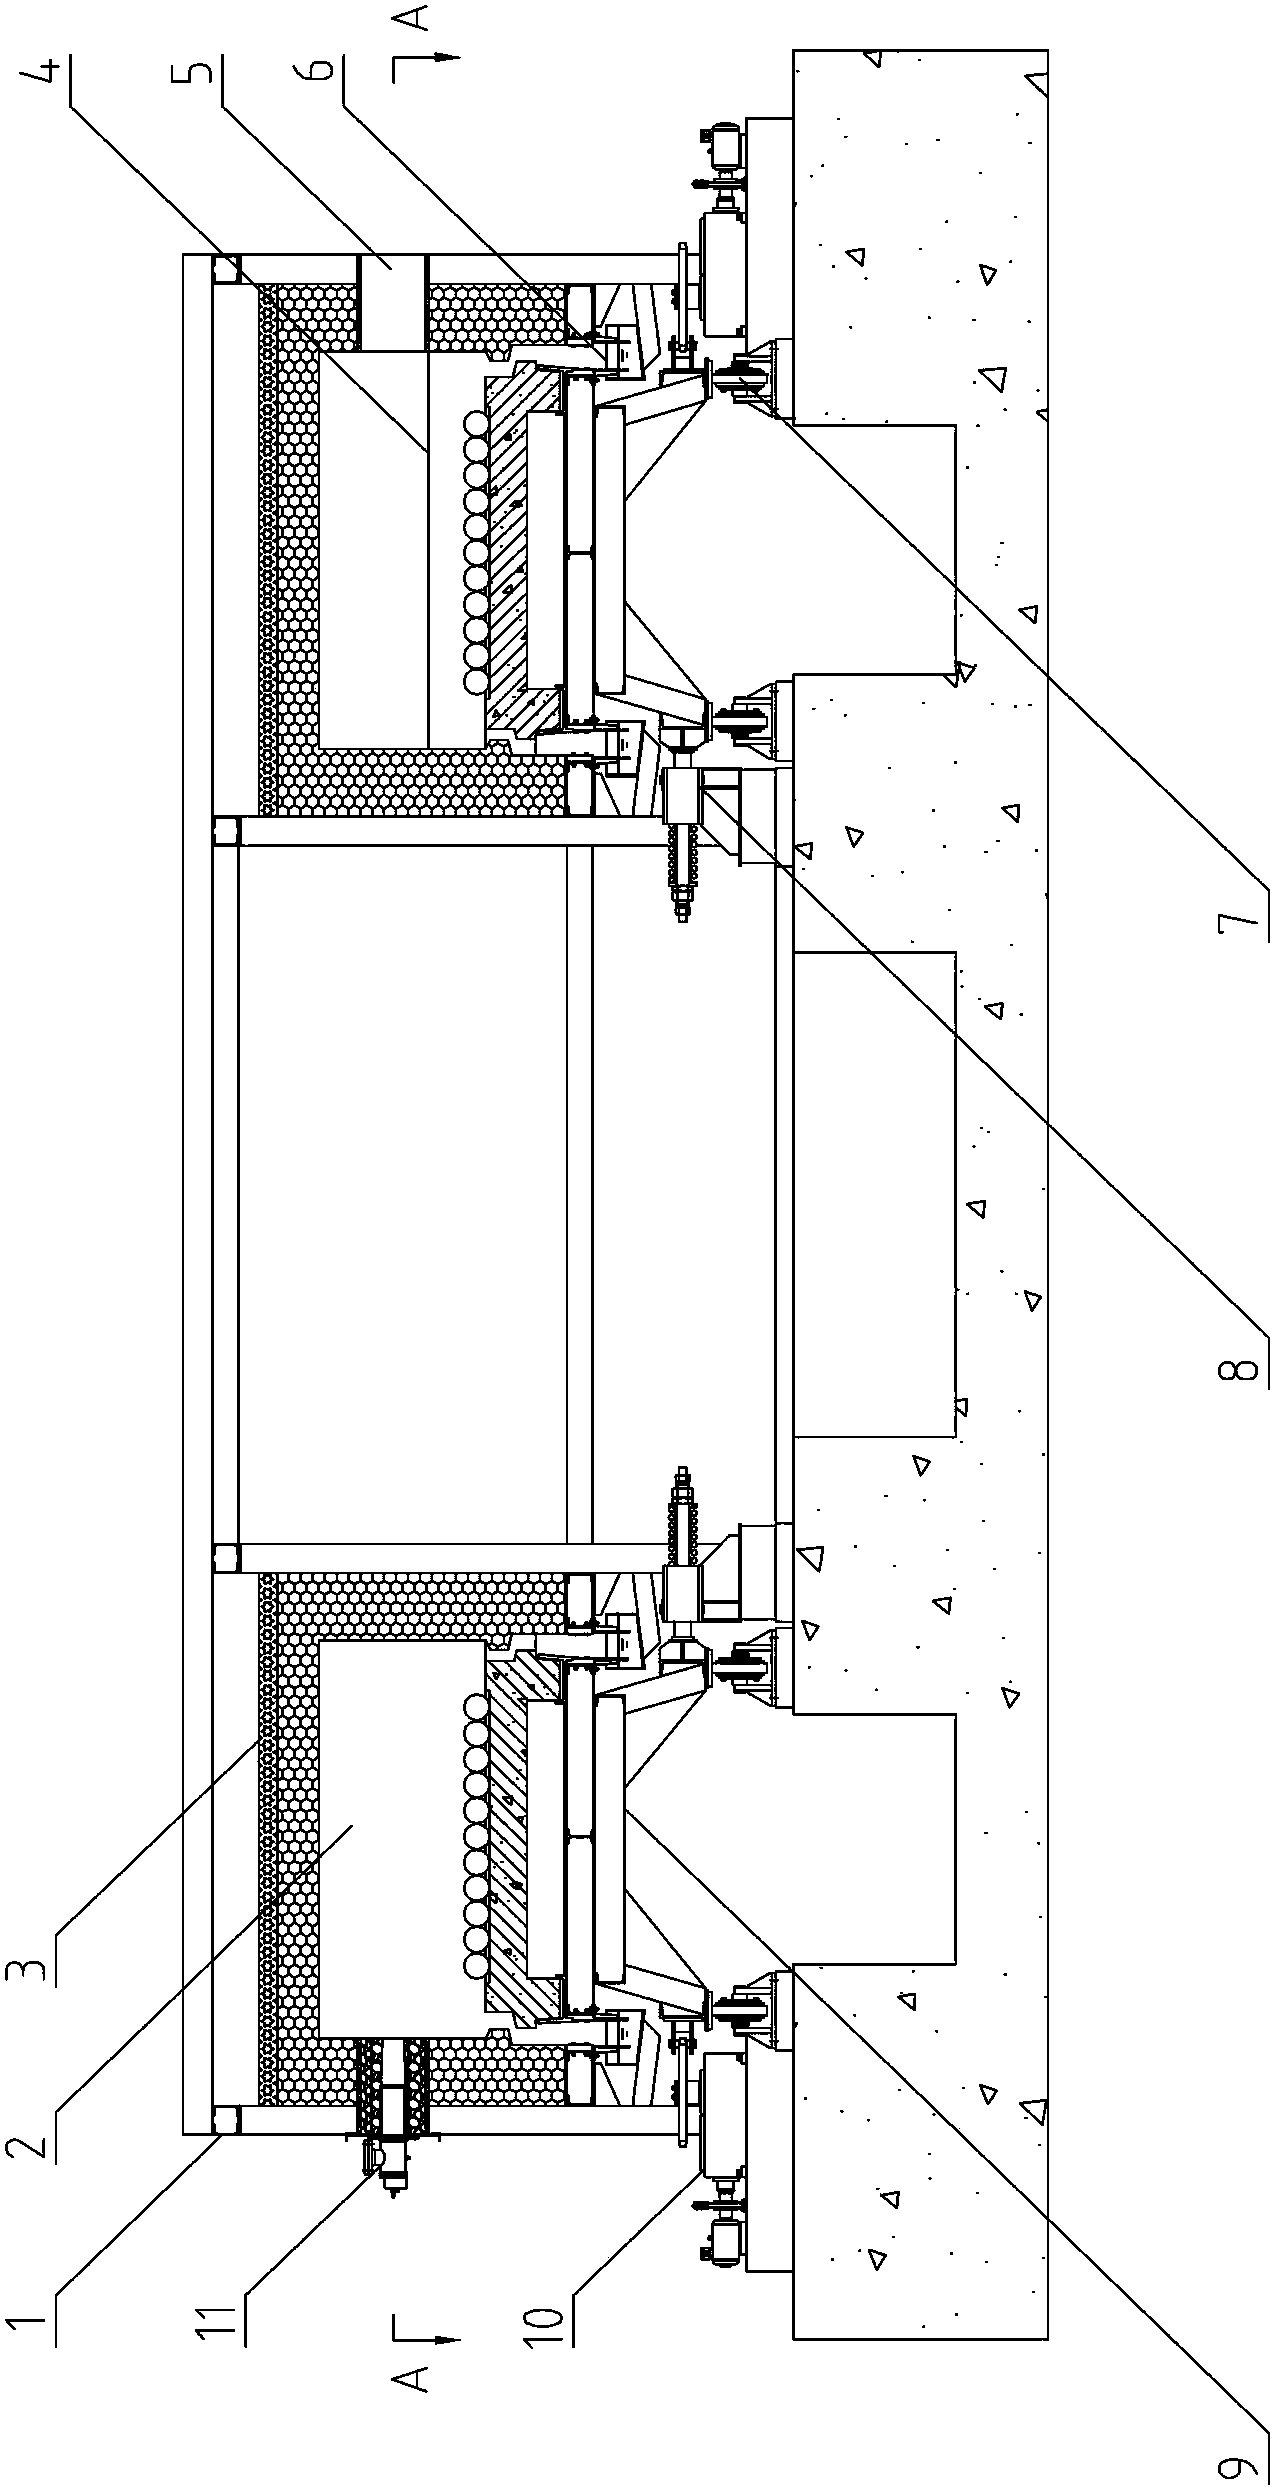 Annular heating furnace with rotary furnace bottom